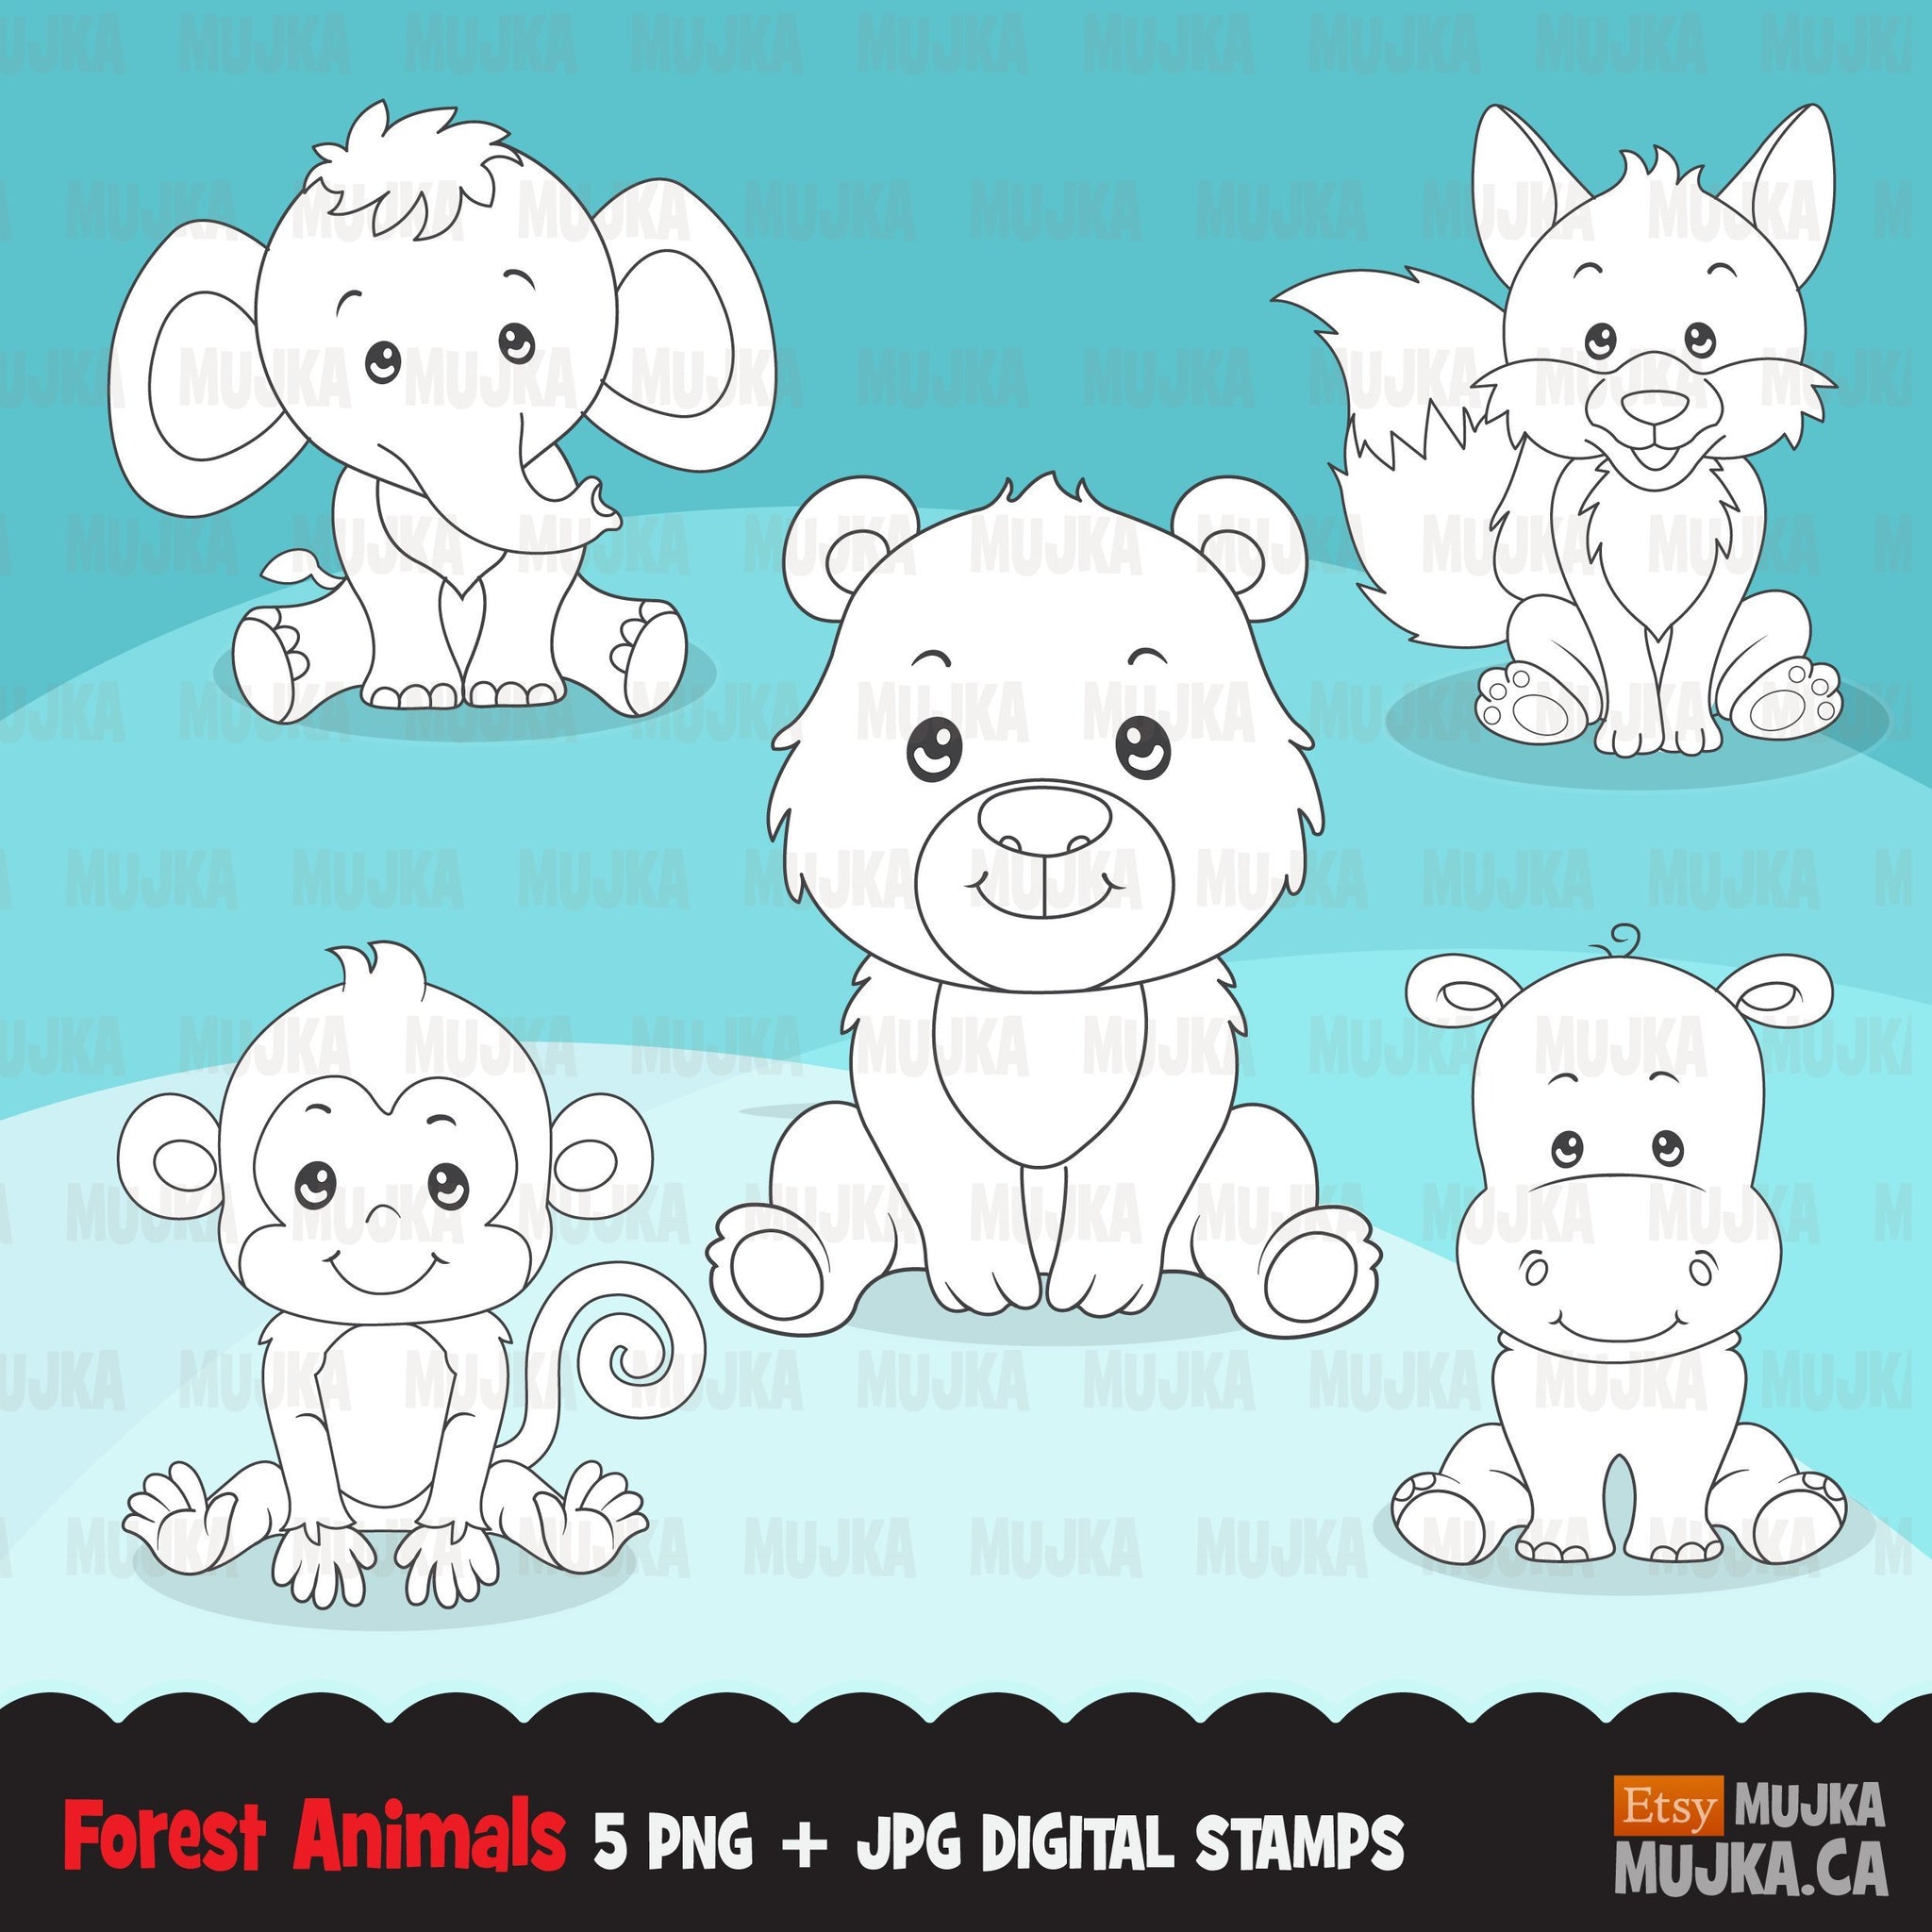 Forest Animal digital stamps